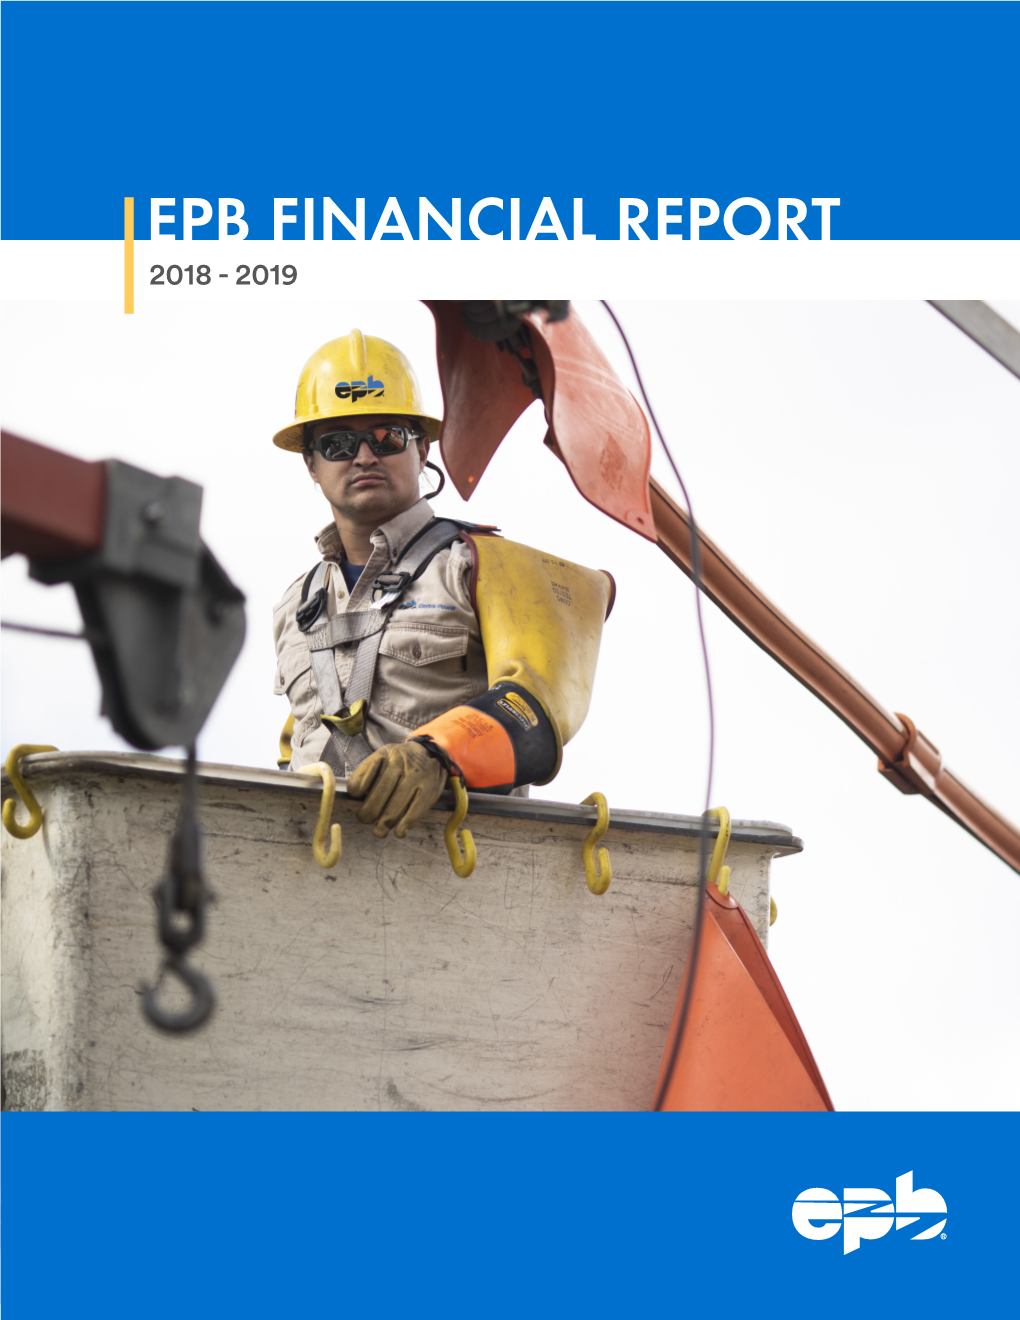 Epb Financial Report 2018 - 2019